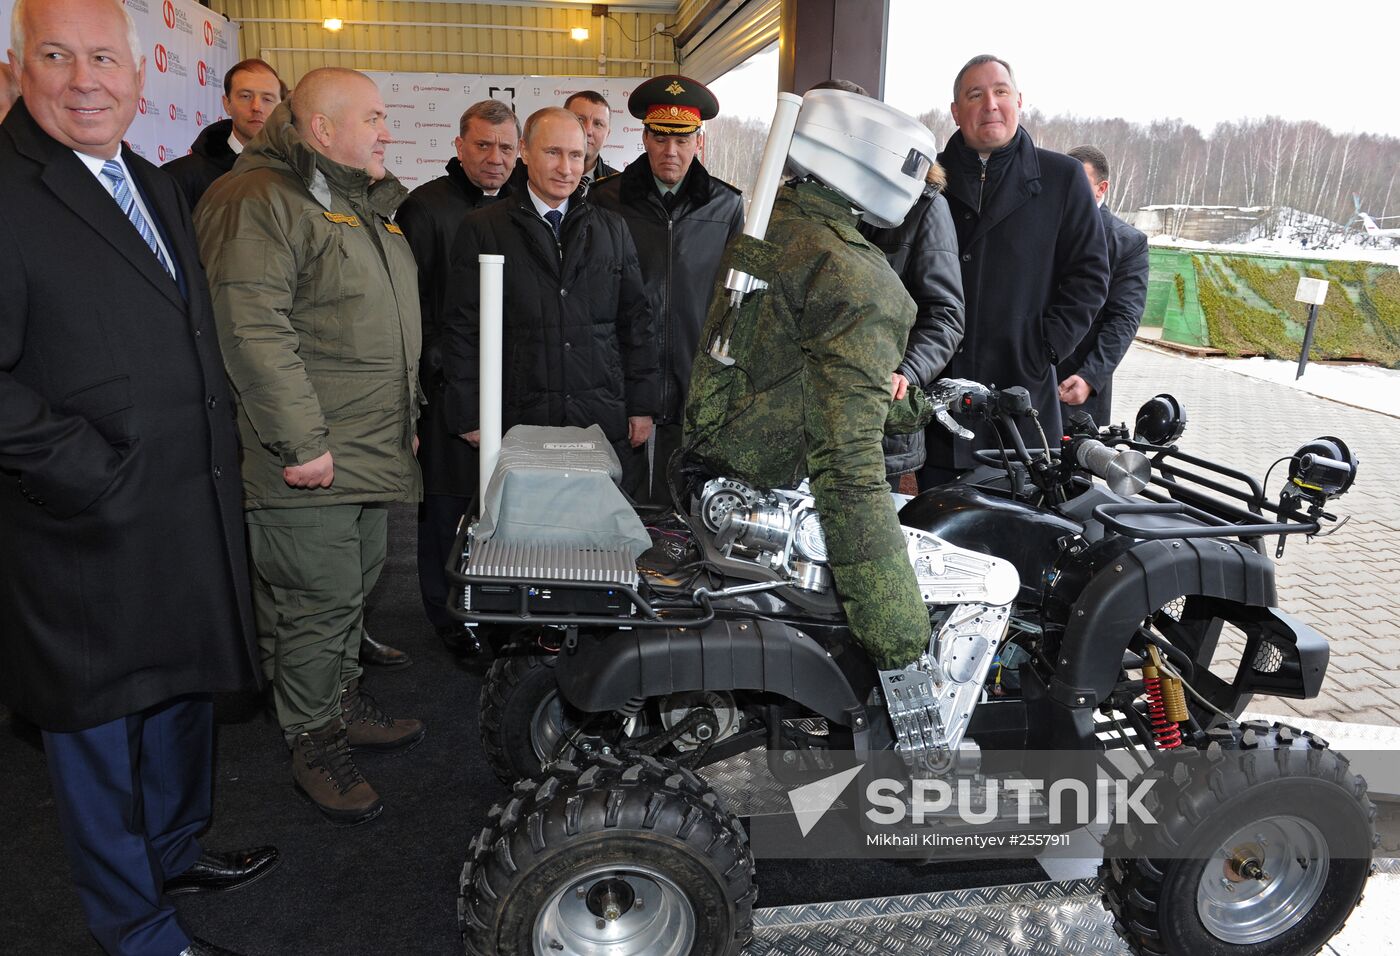 President Vladimir Putin visits research institute of precision mechanics and computer engineering